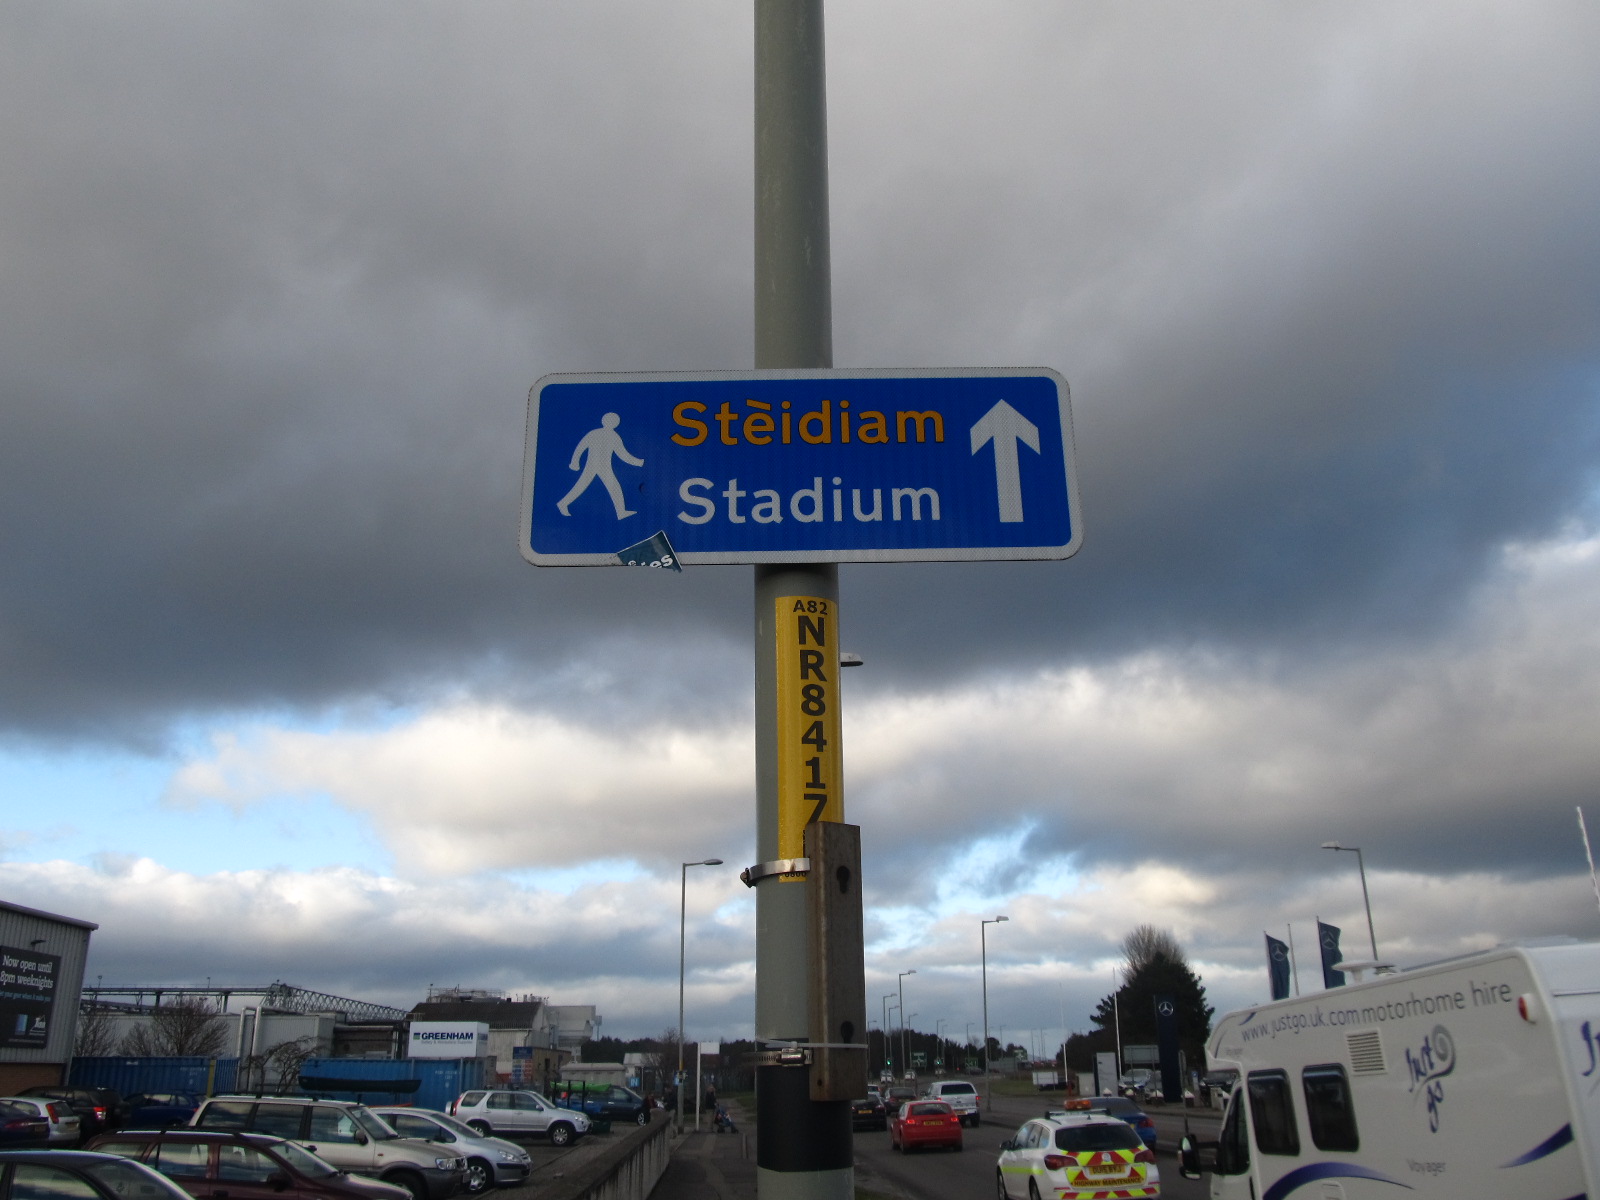 Road signs with Scottish language